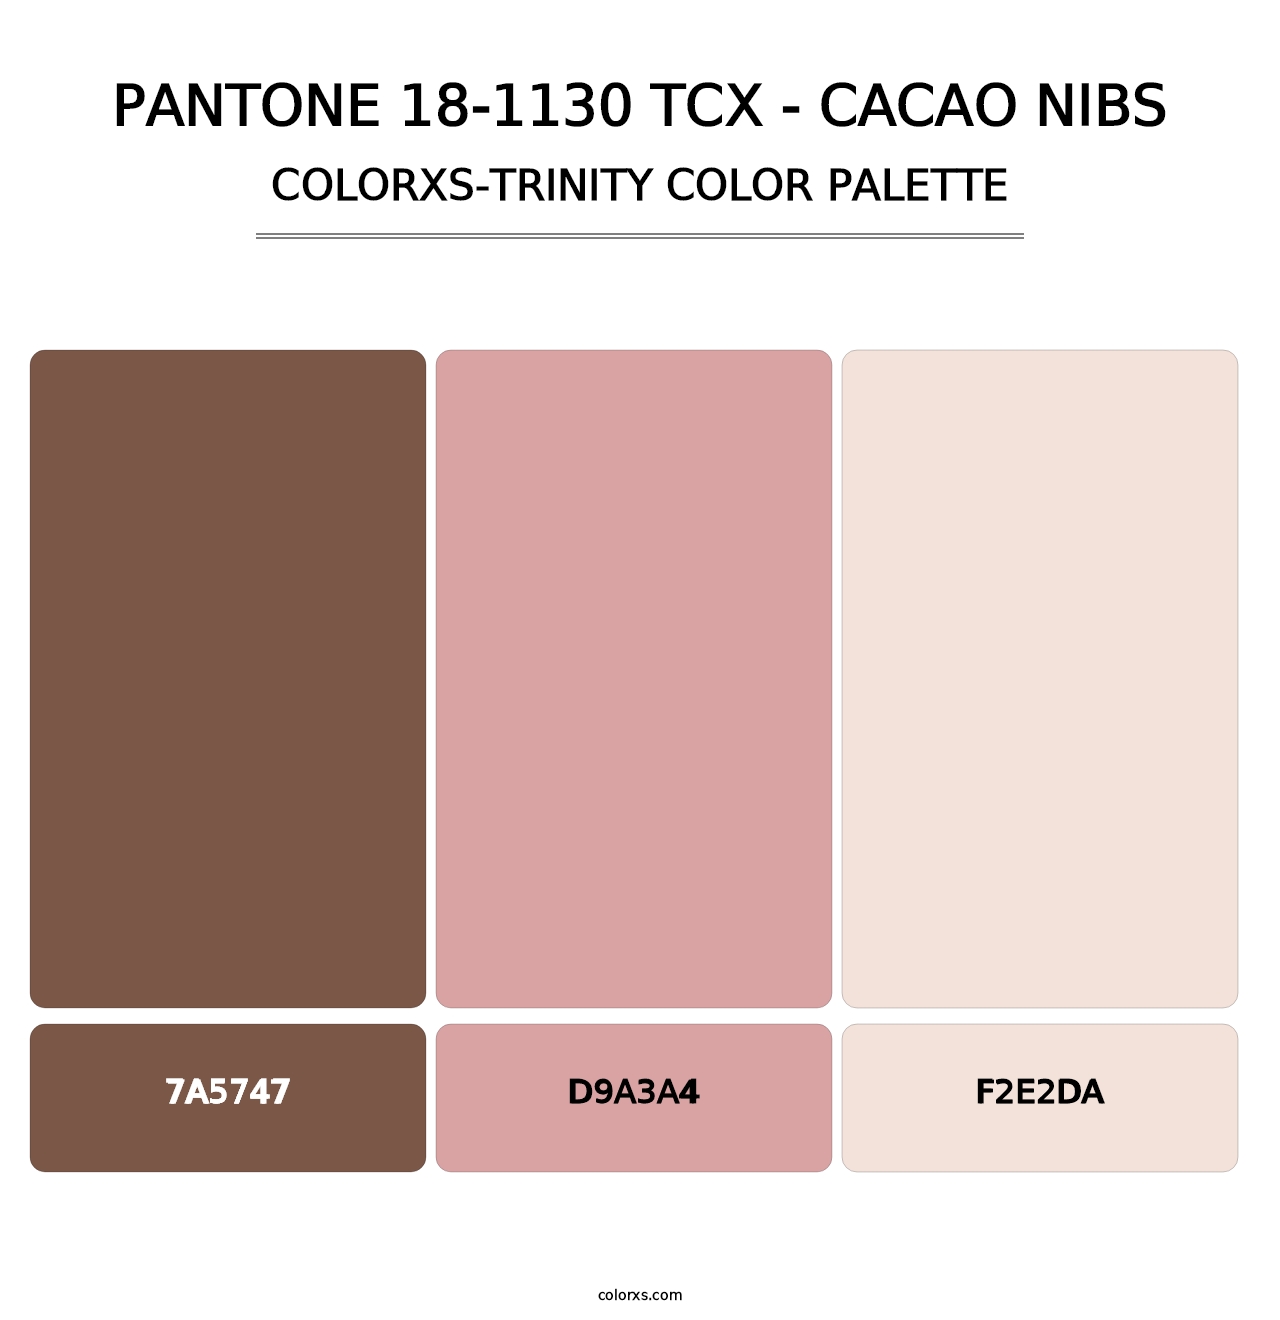 PANTONE 18-1130 TCX - Cacao Nibs - Colorxs Trinity Palette